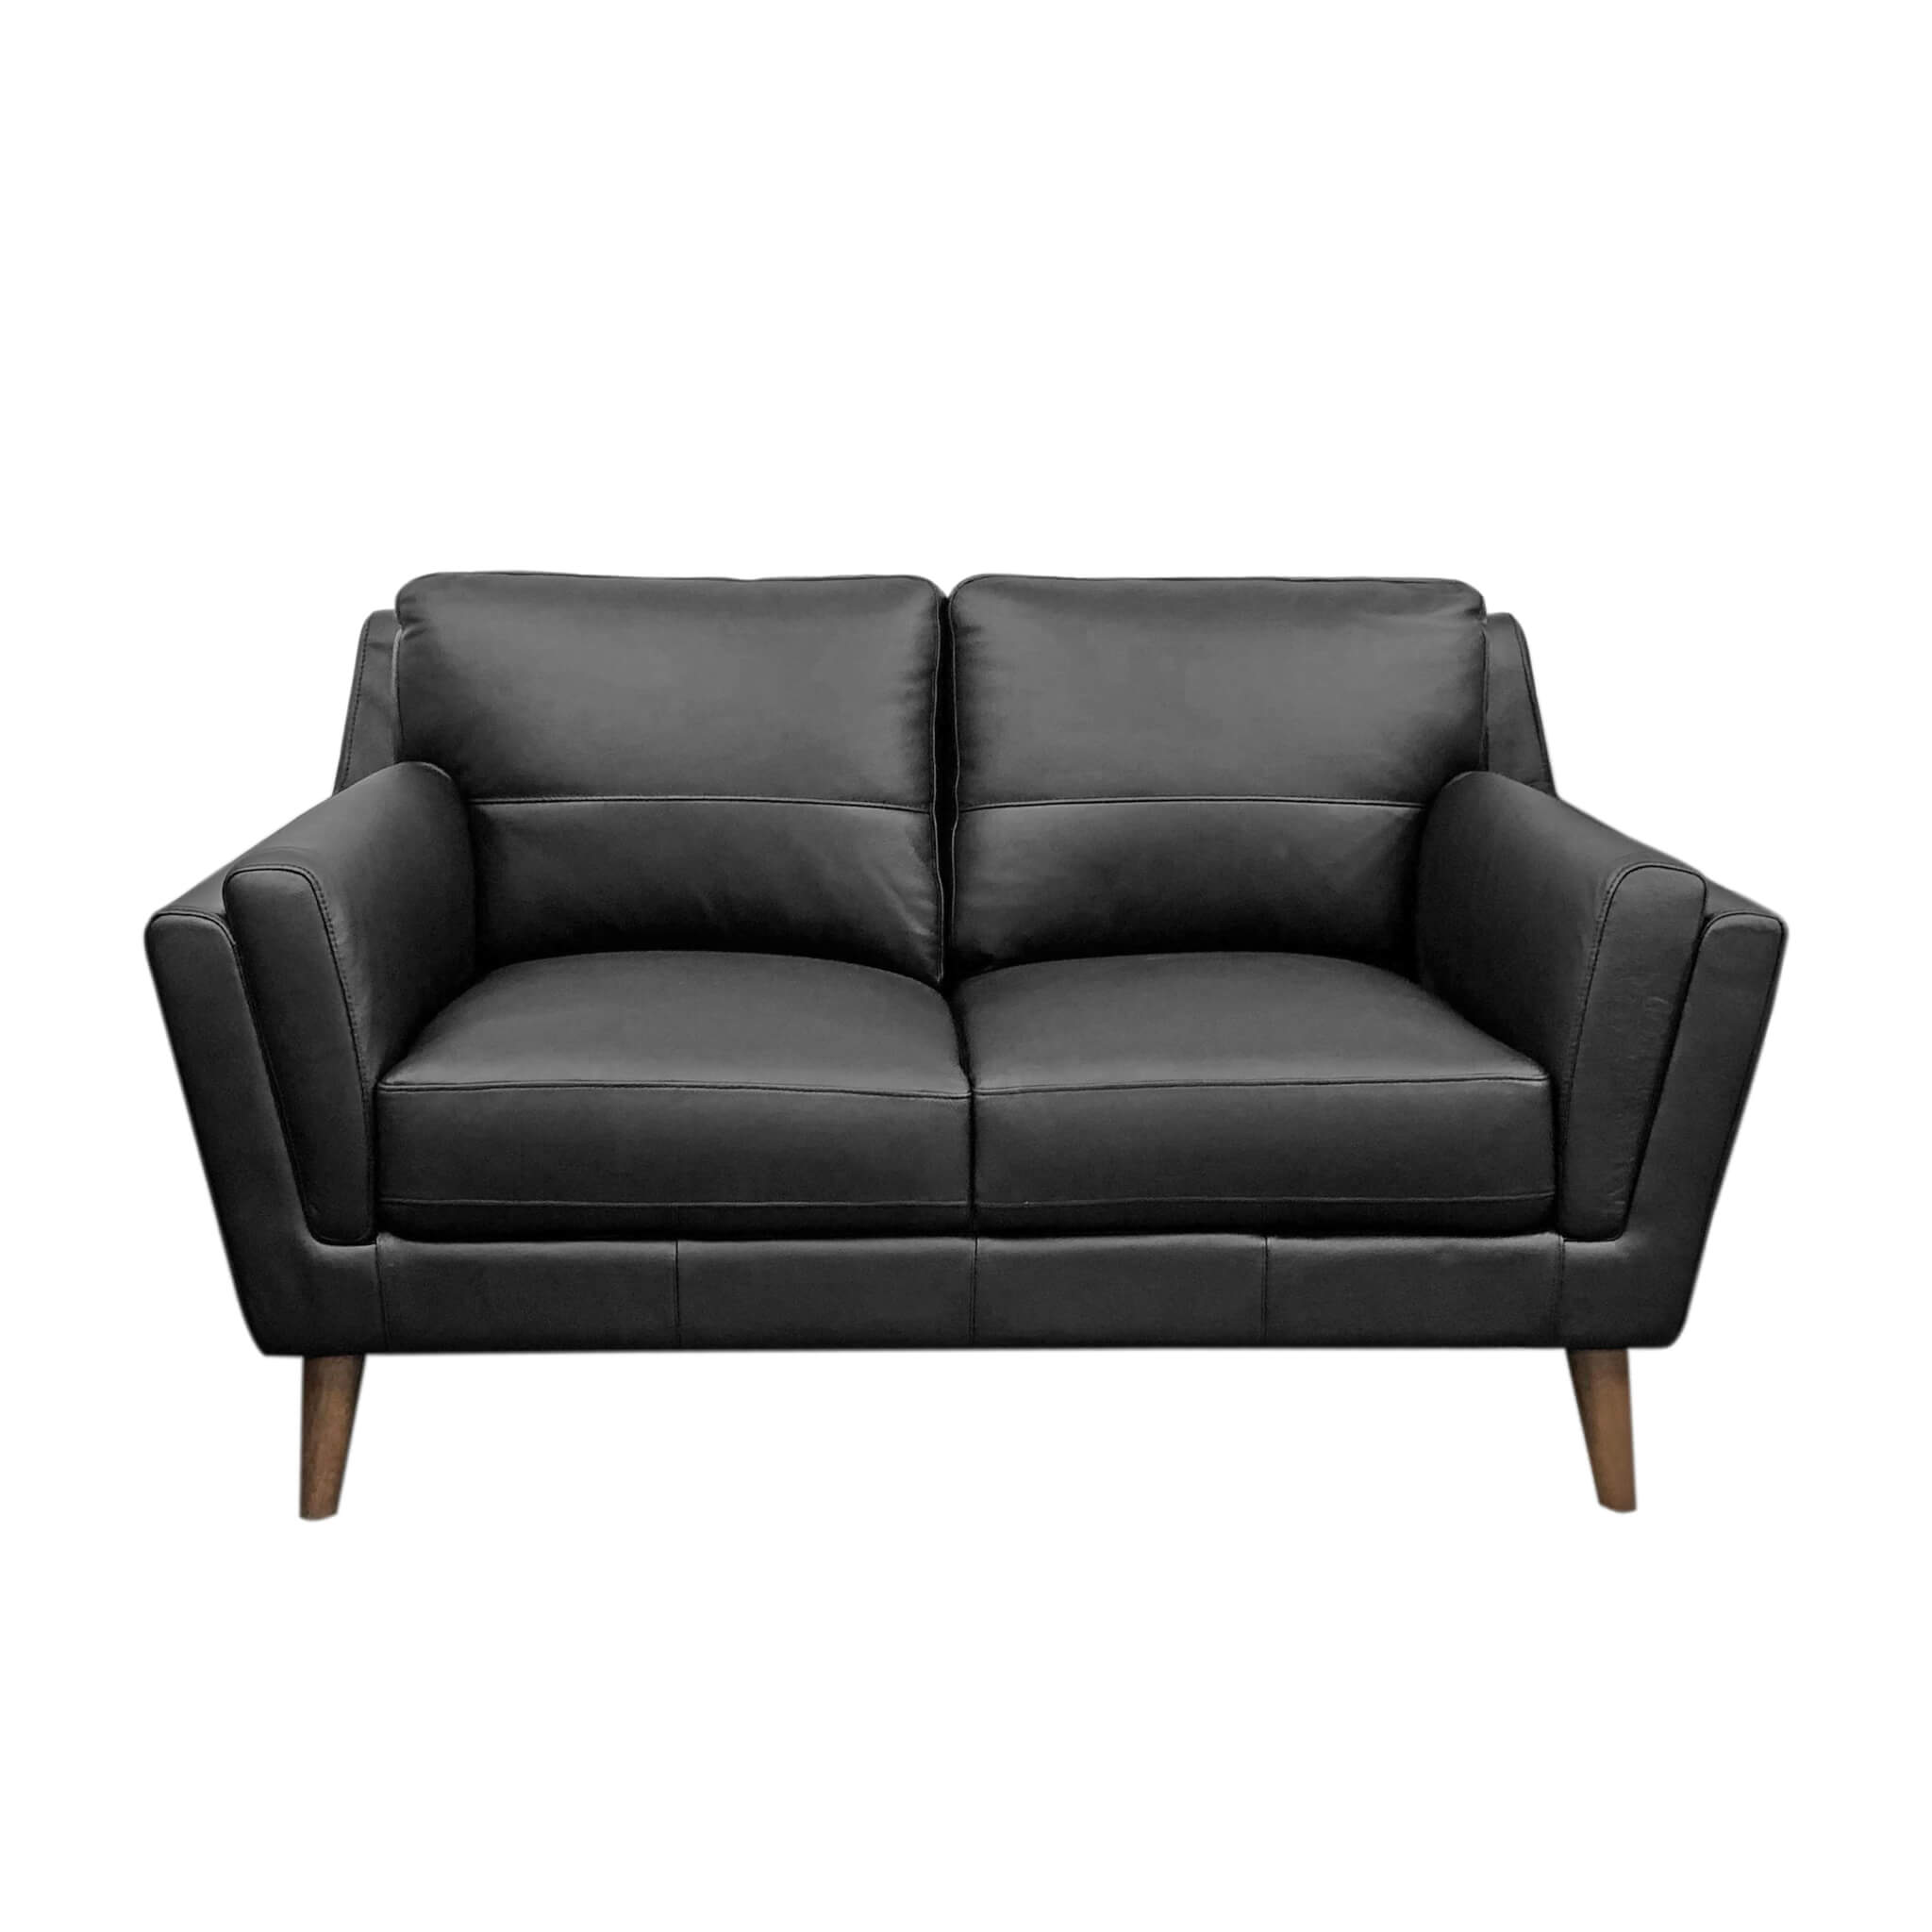 Toledo 3 Seater Leather Sofa